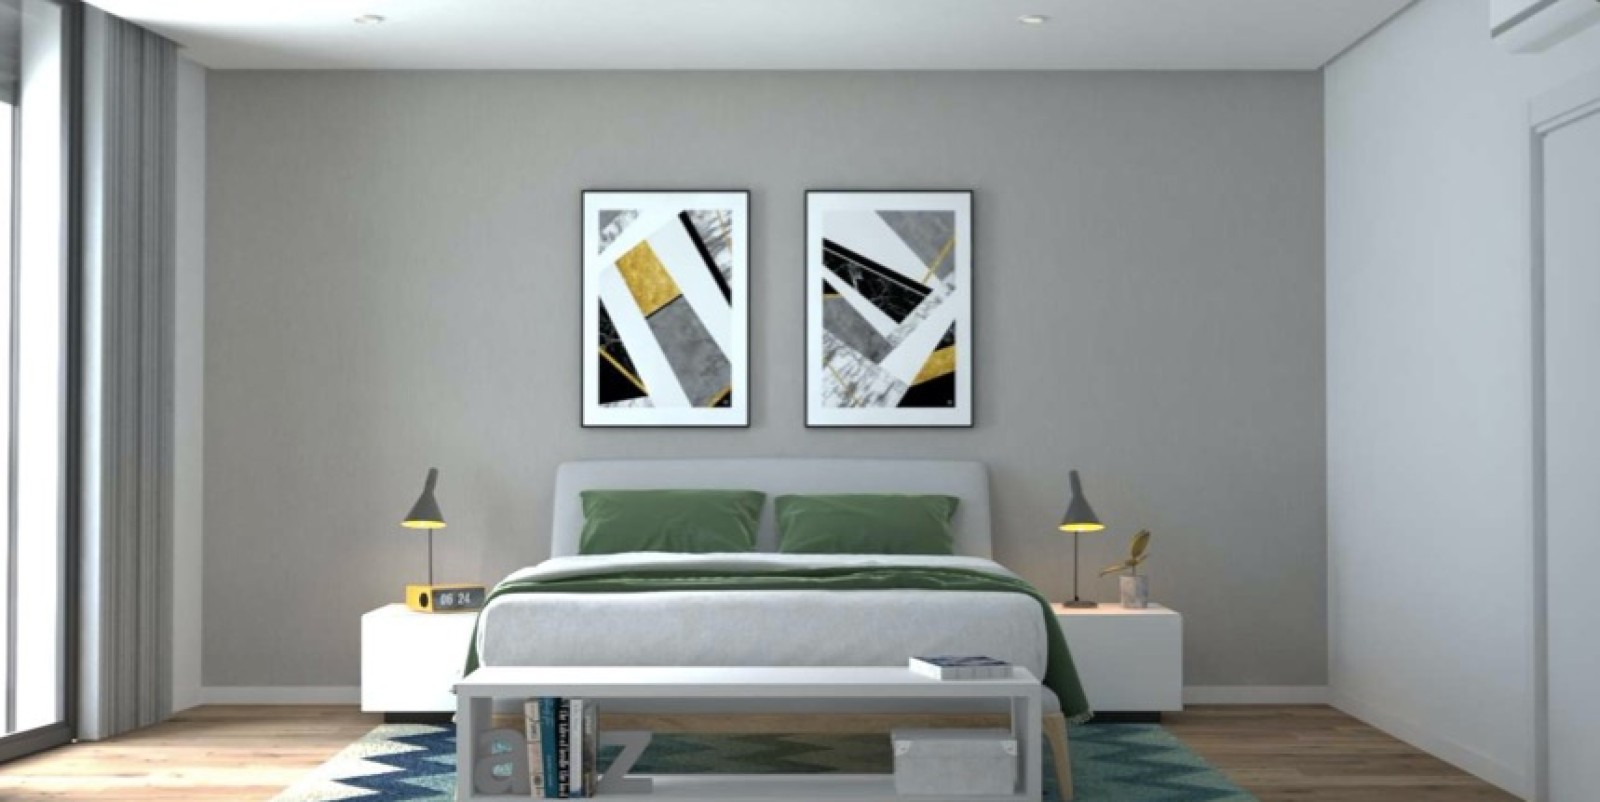 5 bedroom duplex flat for sale in São brás de Alportel, Algarve_226398